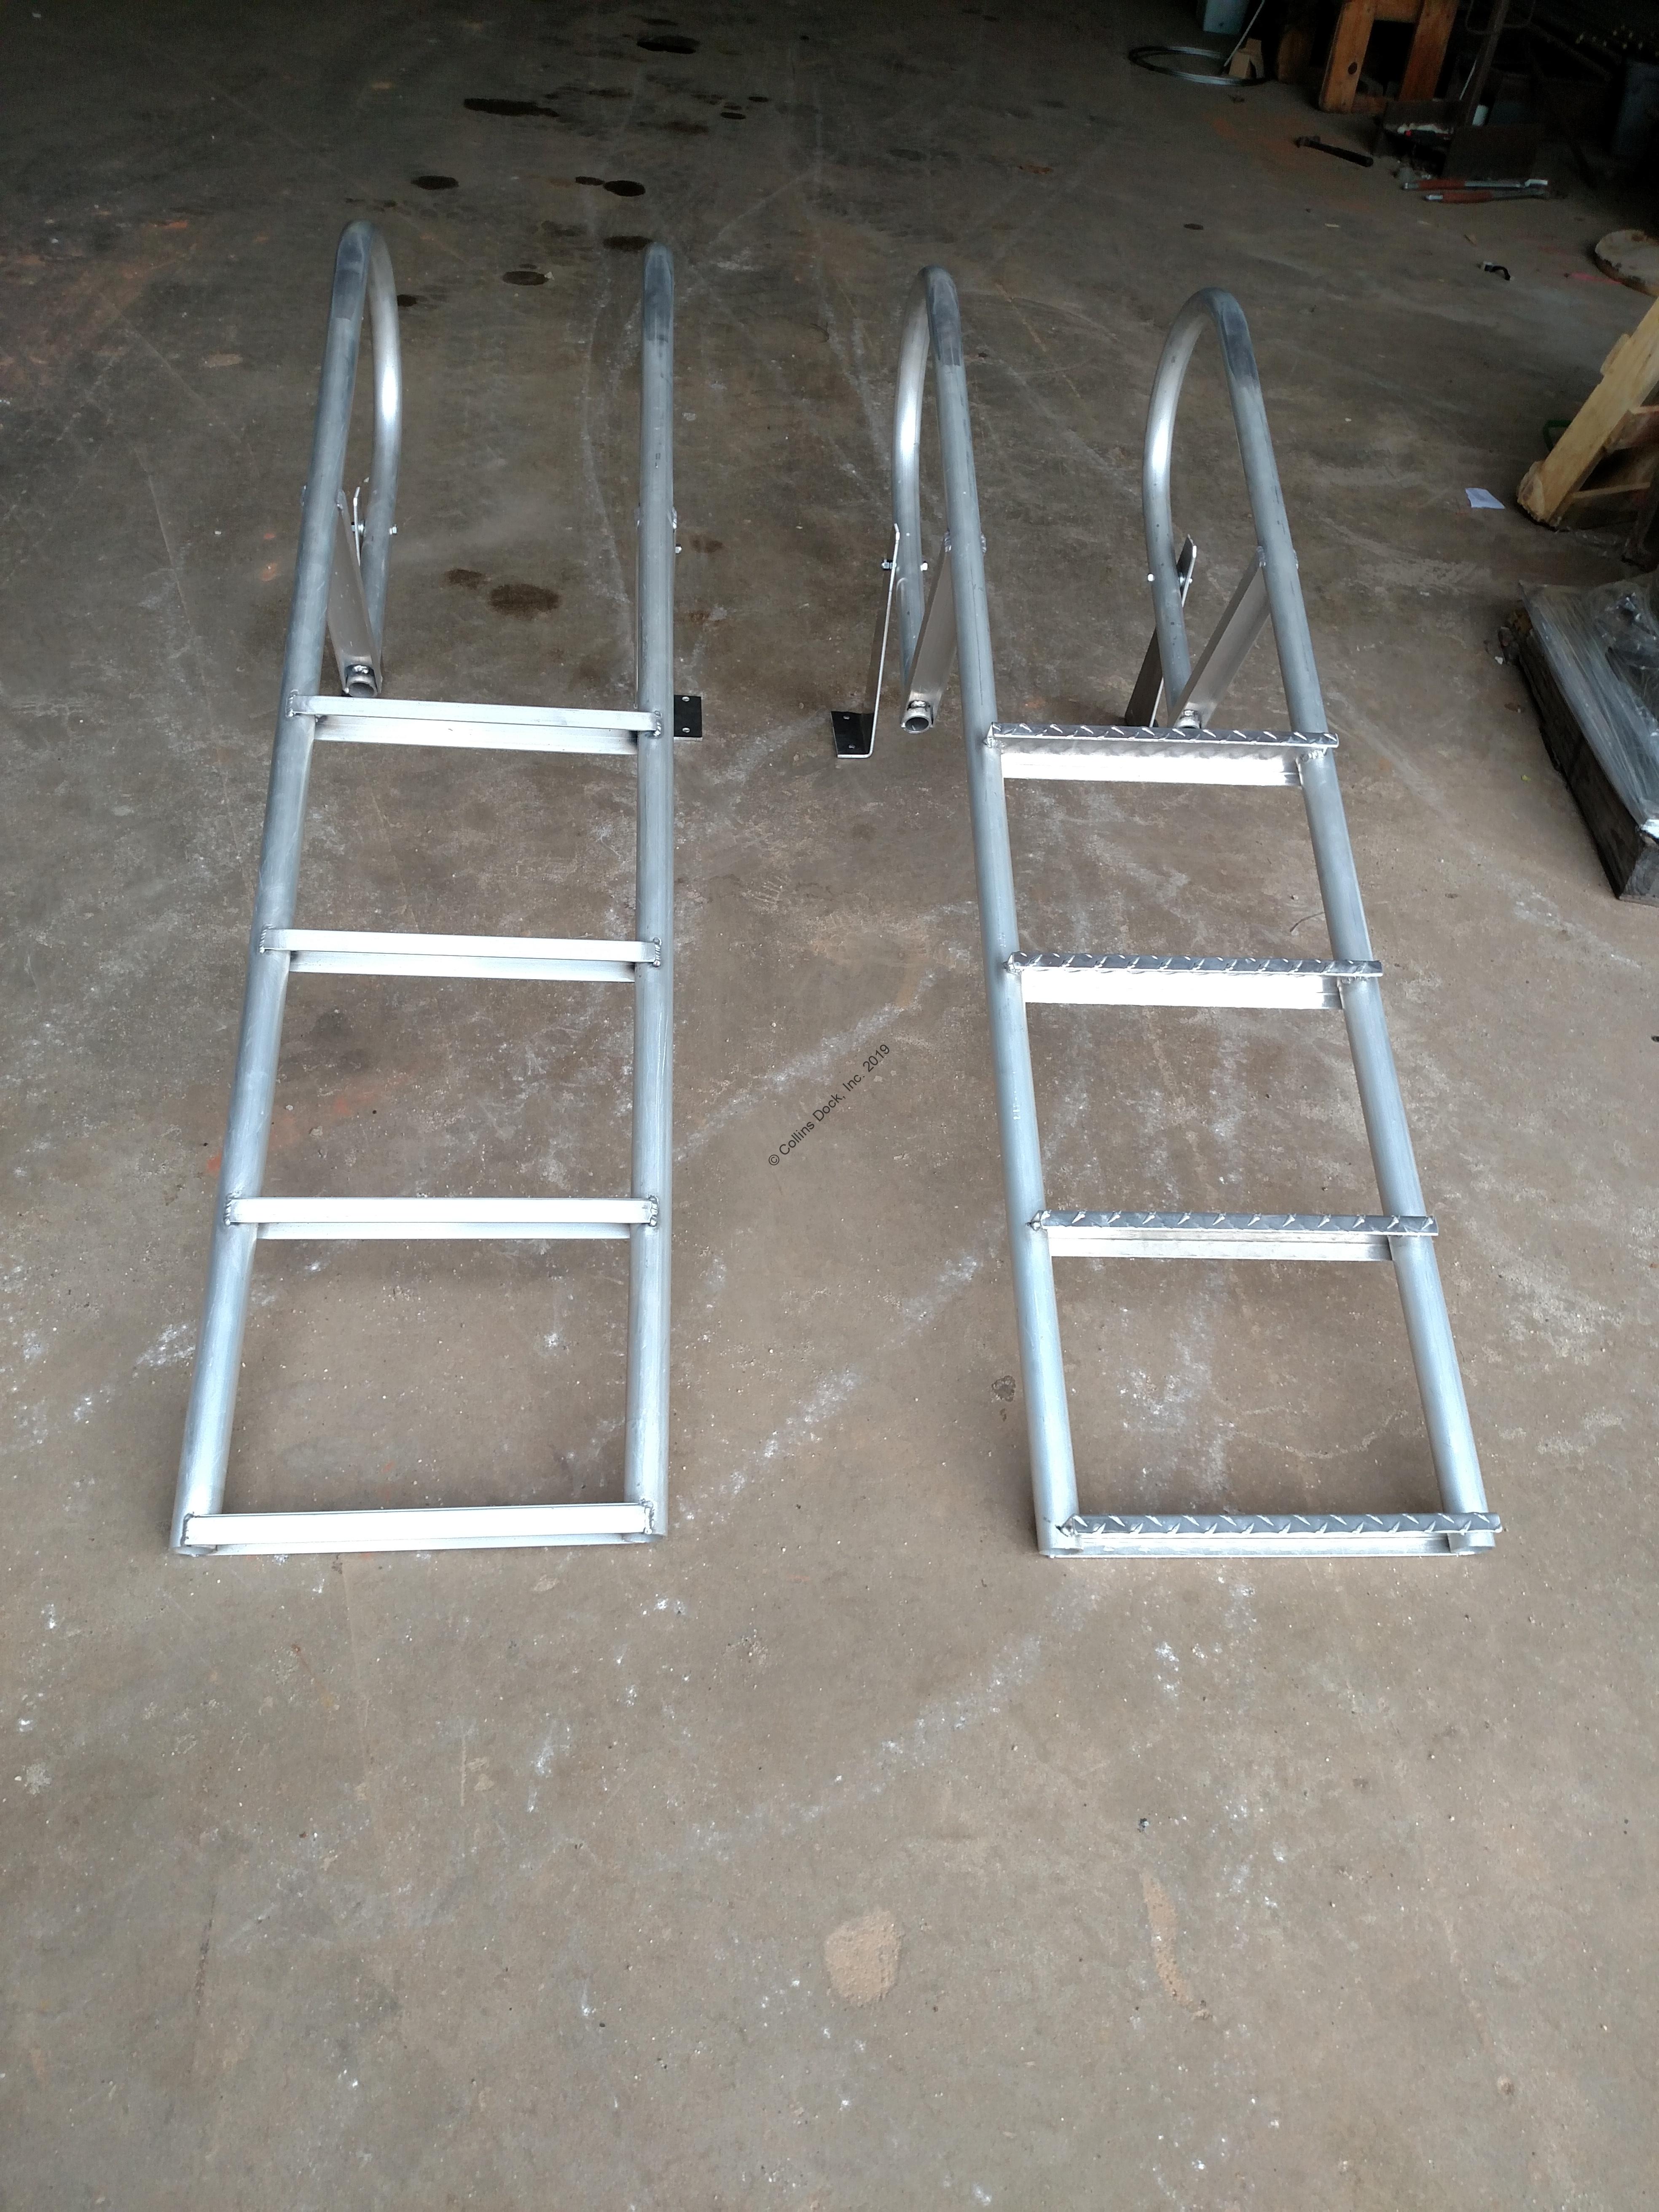 laddertypes